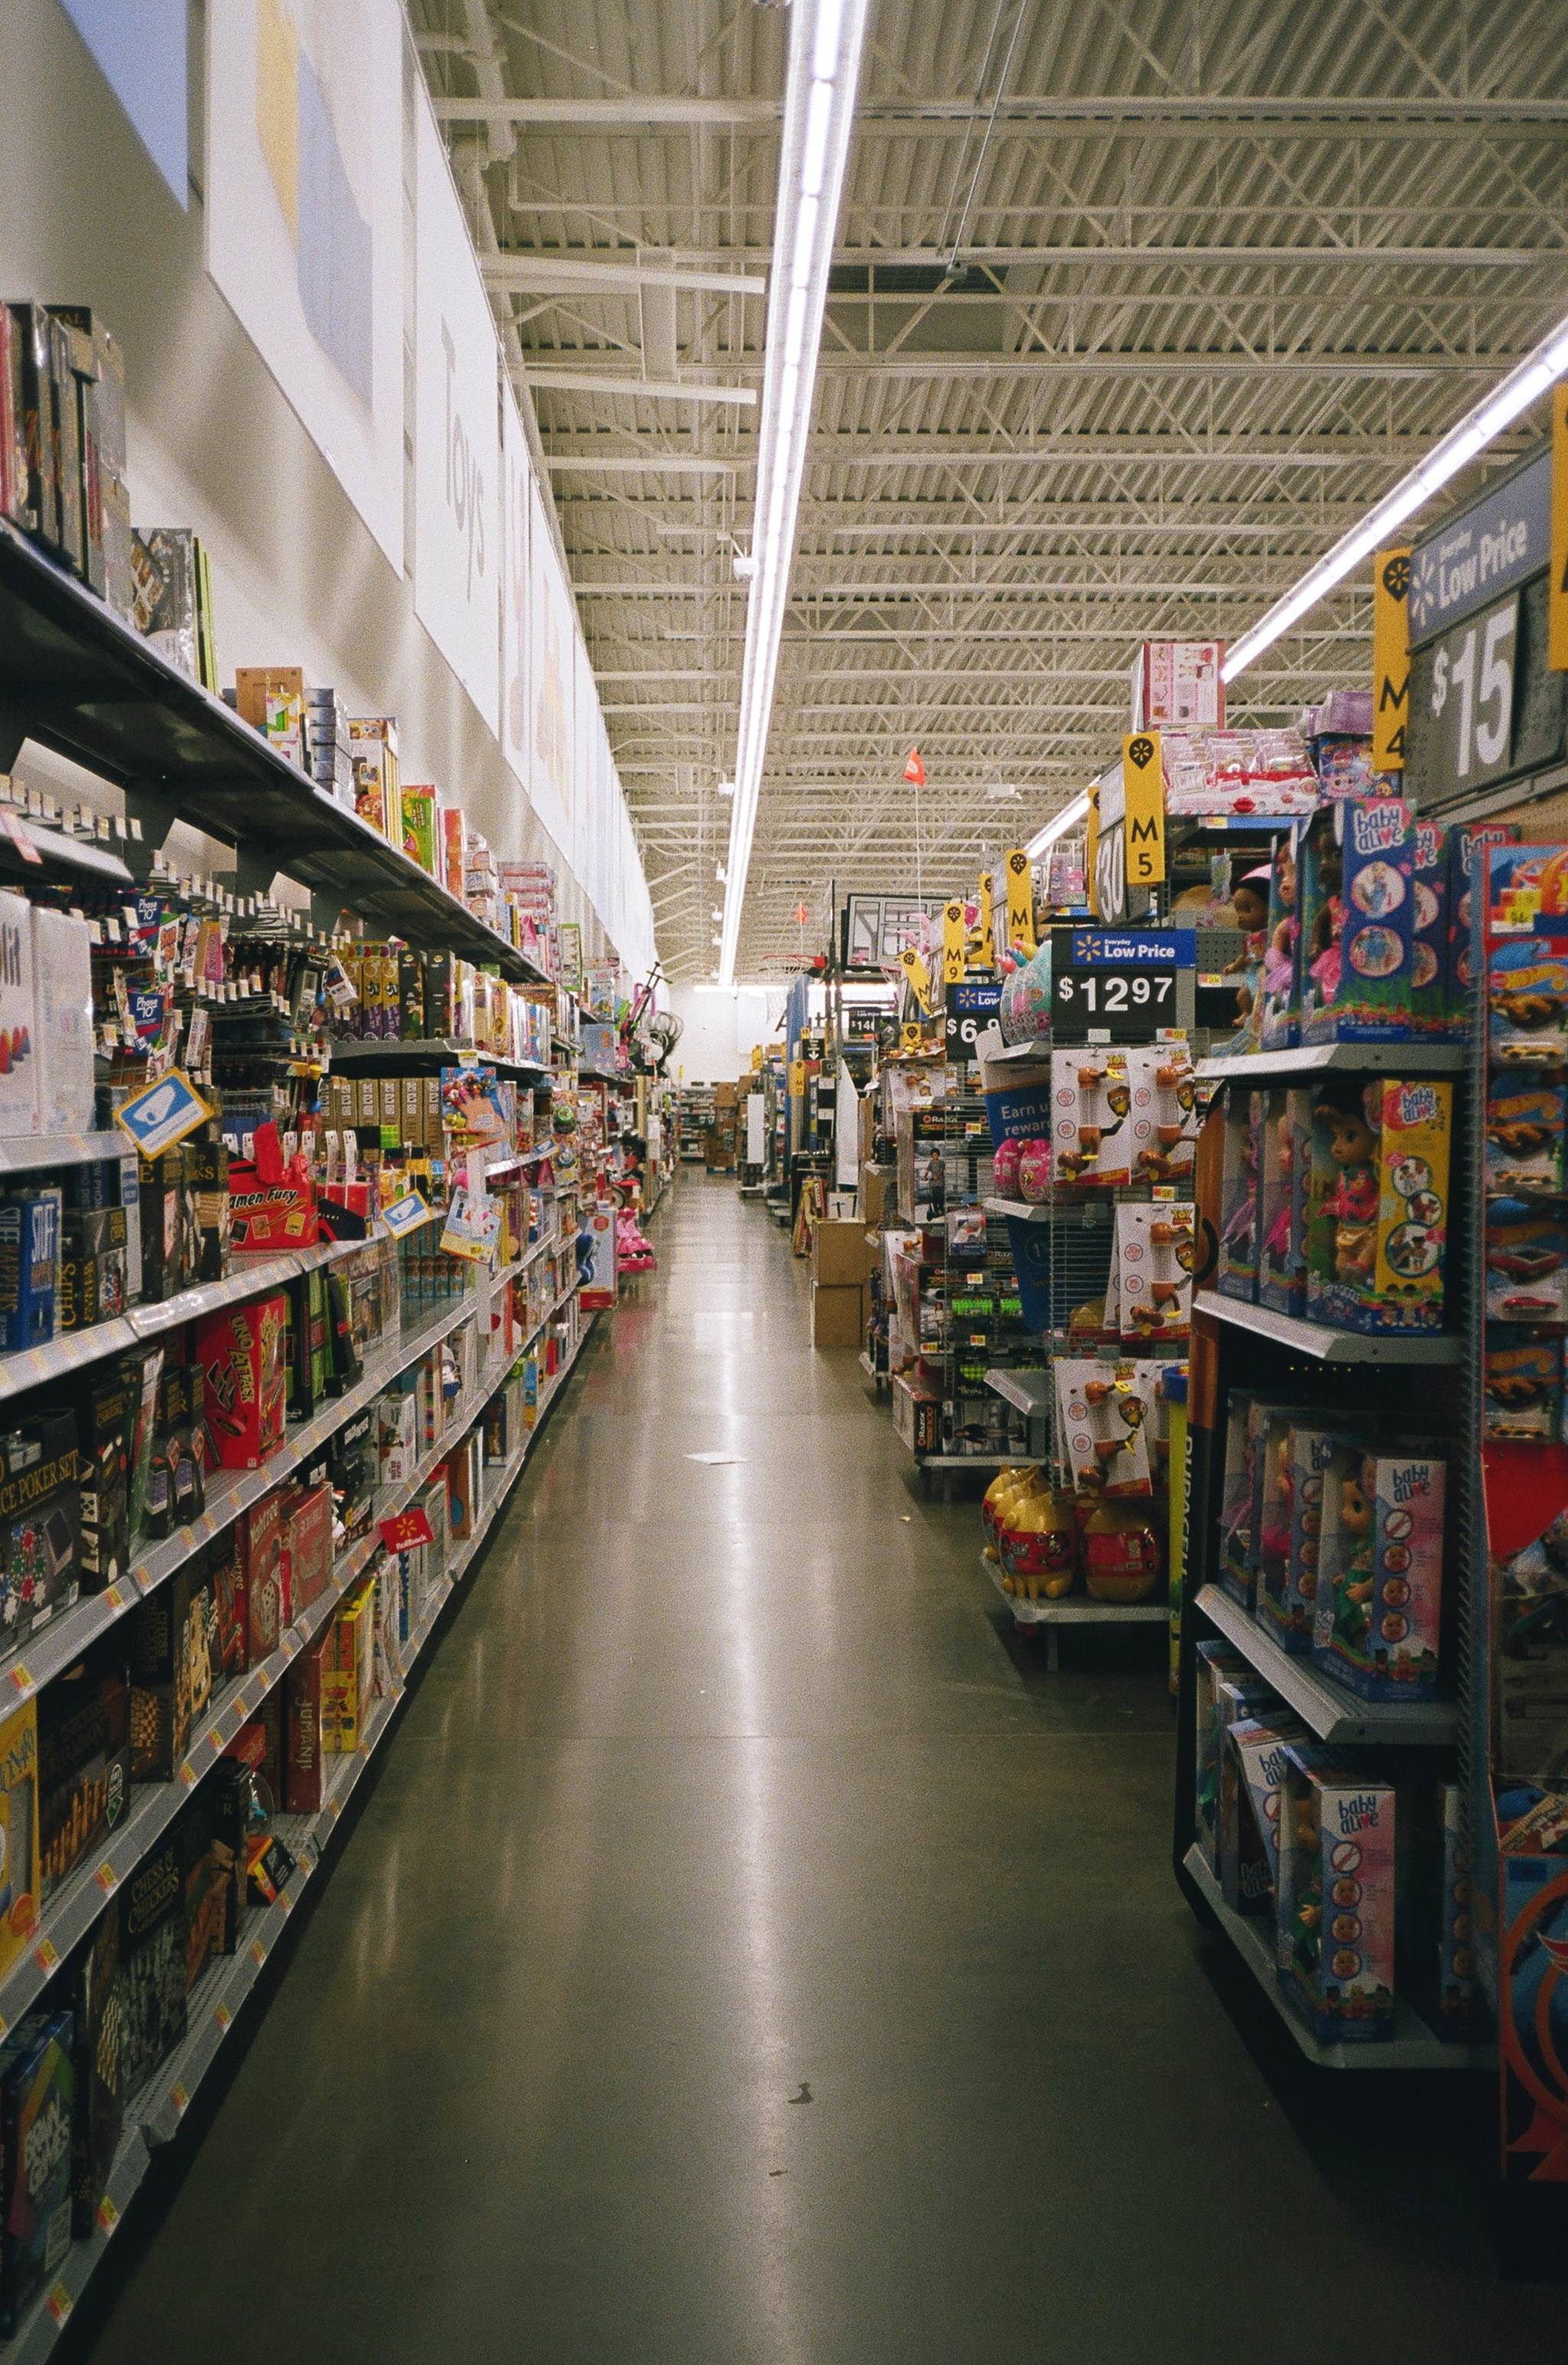 Walmart Creator gives influencers a retail platform